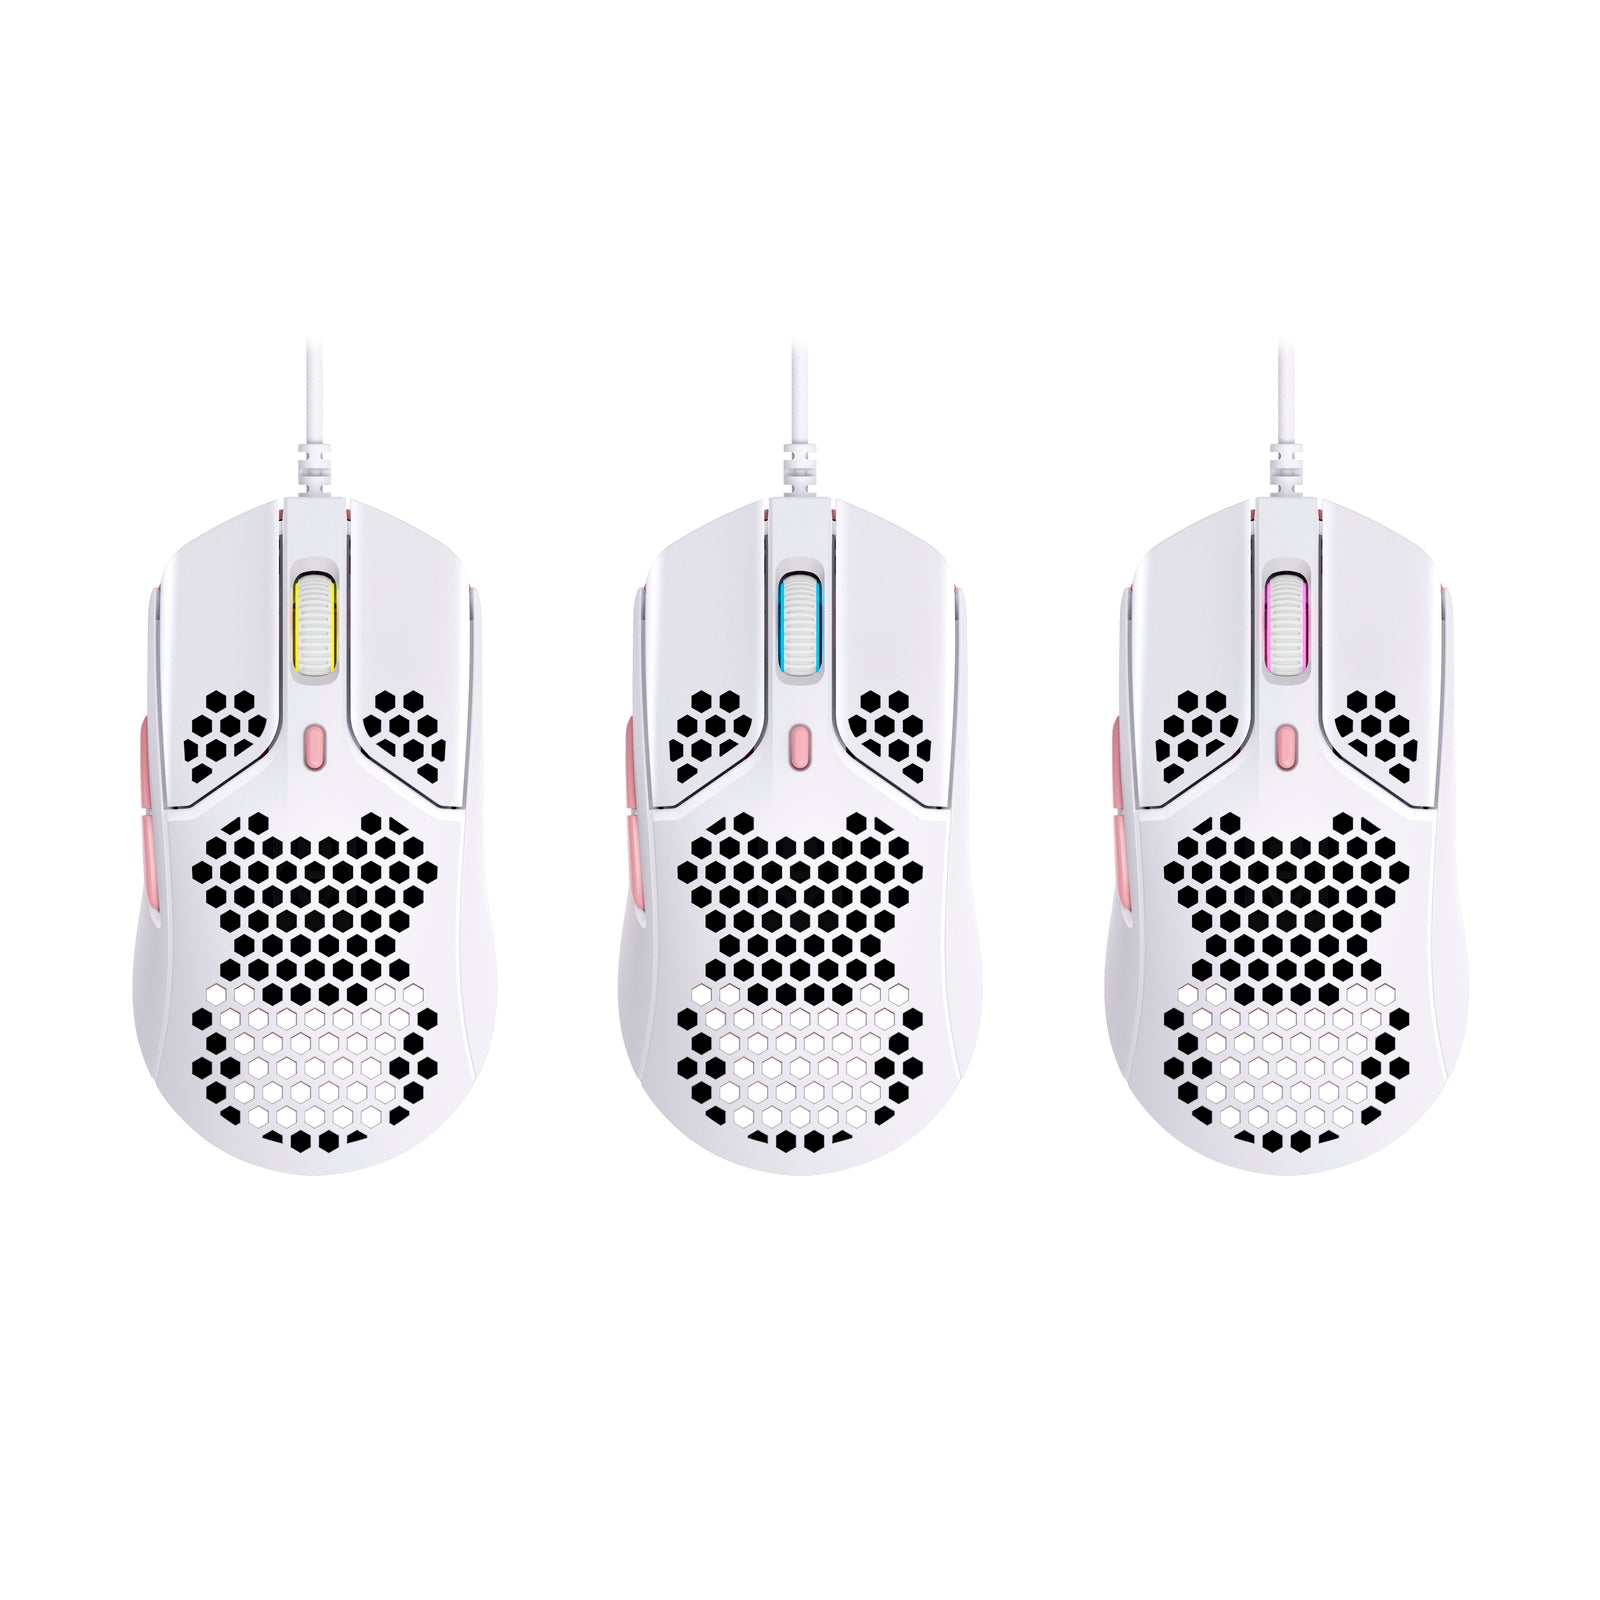 HyperX Pulsefire Haste Pink-White Gaming Mouse showing RGB lighting